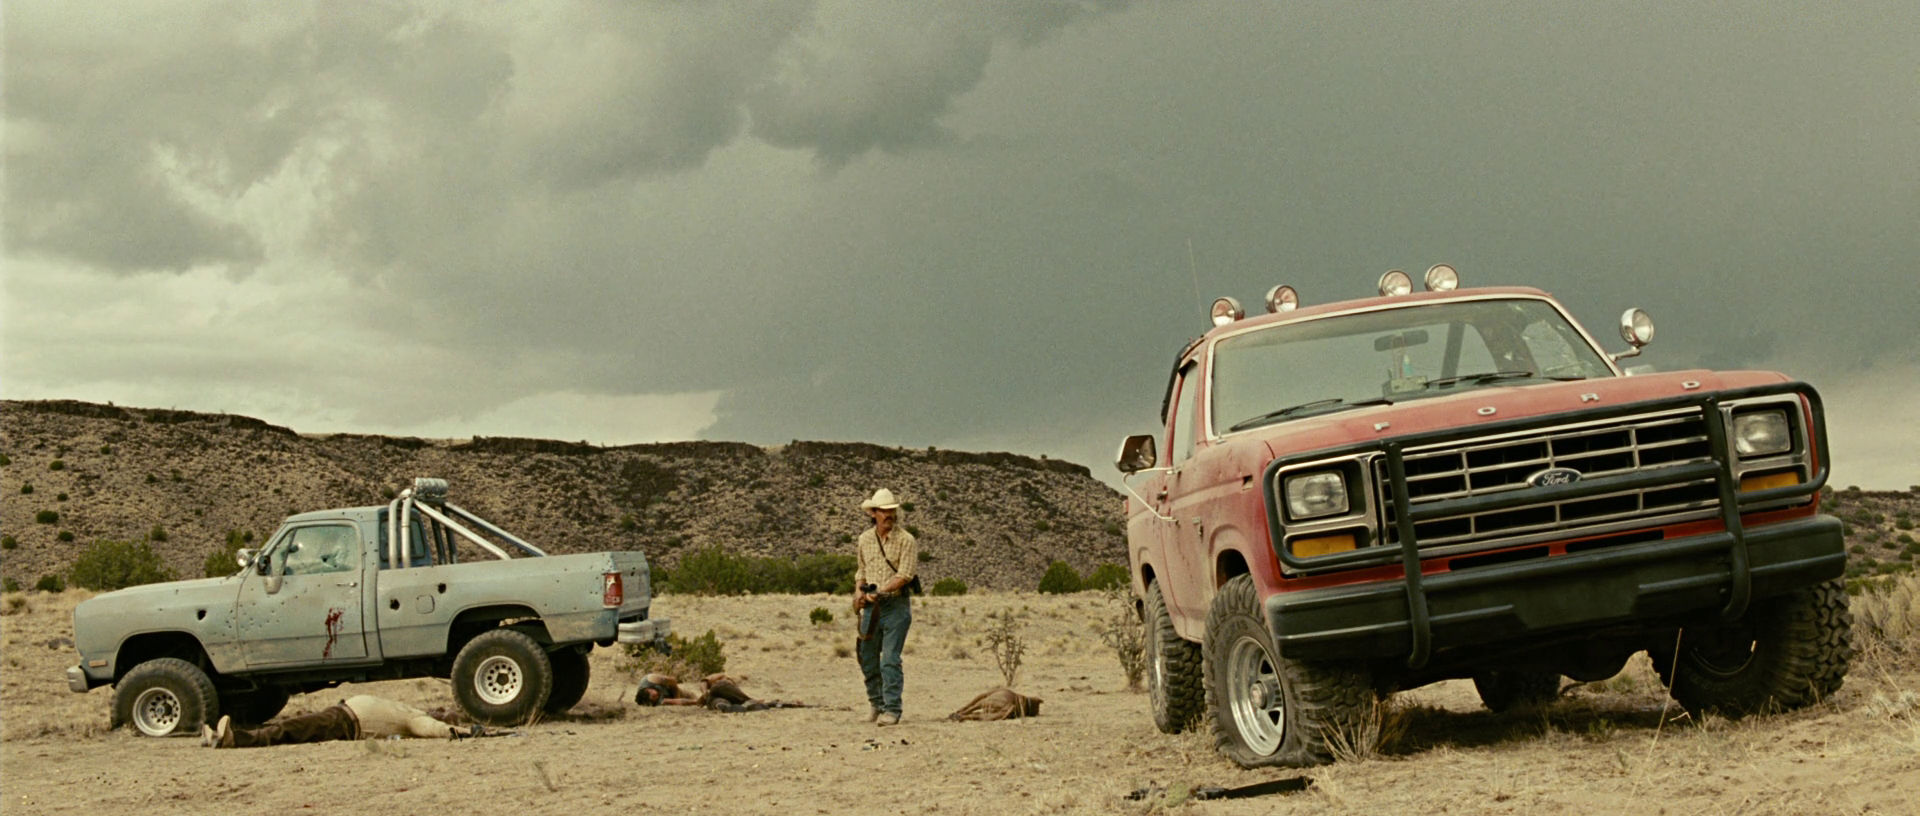 No Country For Old Men Movies Film Stills Sky Clouds Car Vehicle Hat Gun Desert 1920x816